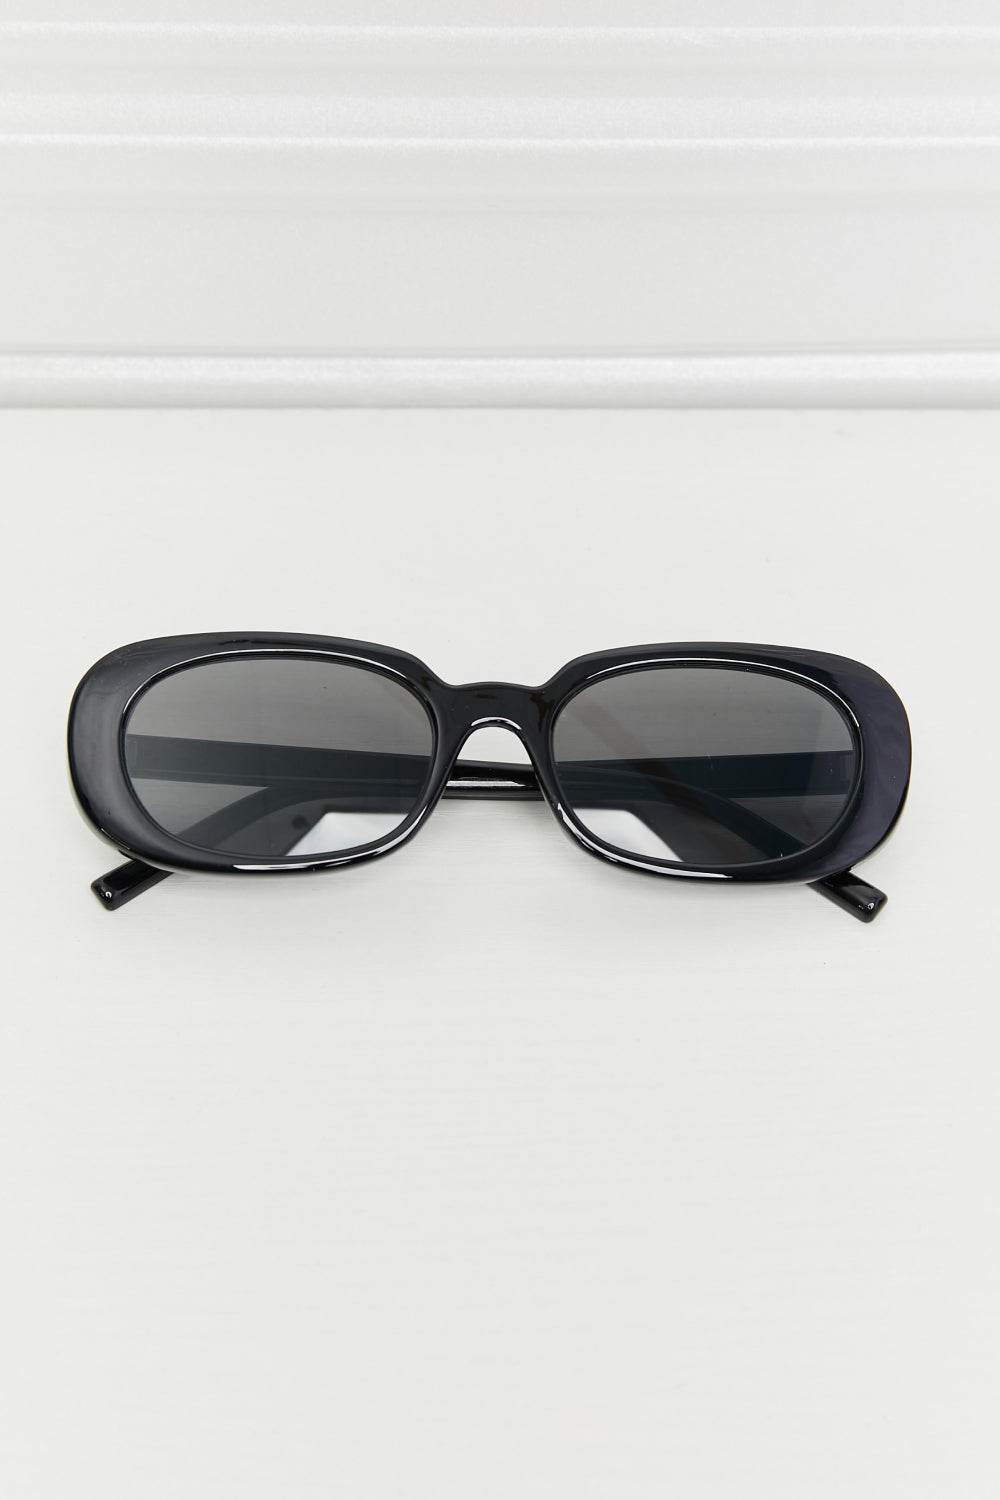 Uylee's Boutique Oval Full Rim Sunglasses